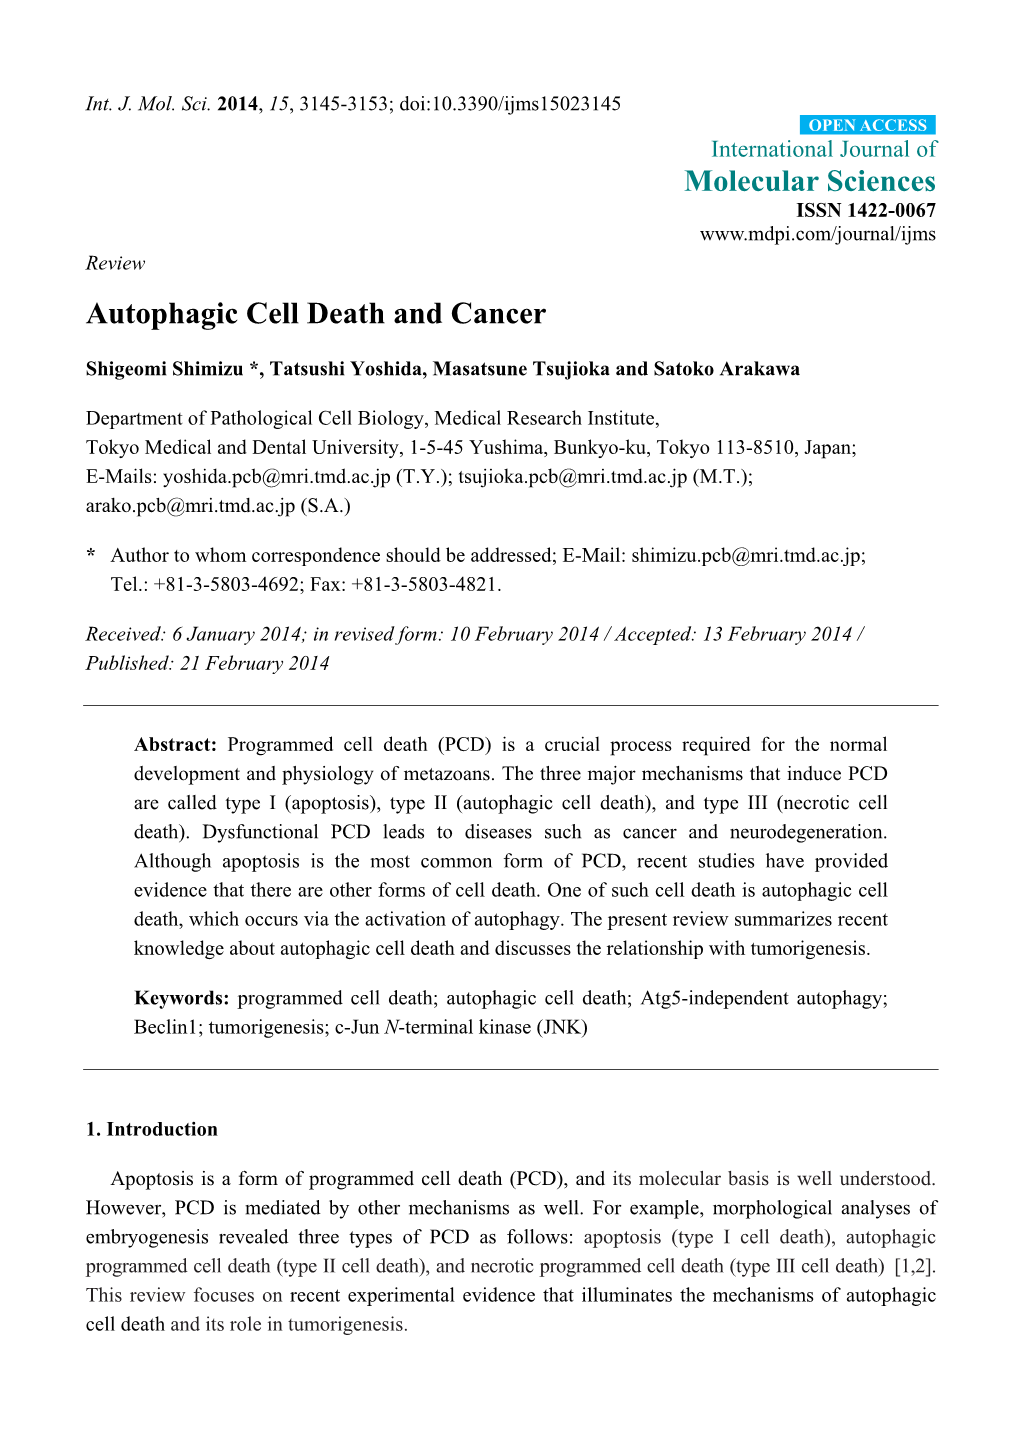 Autophagic Cell Death and Cancer